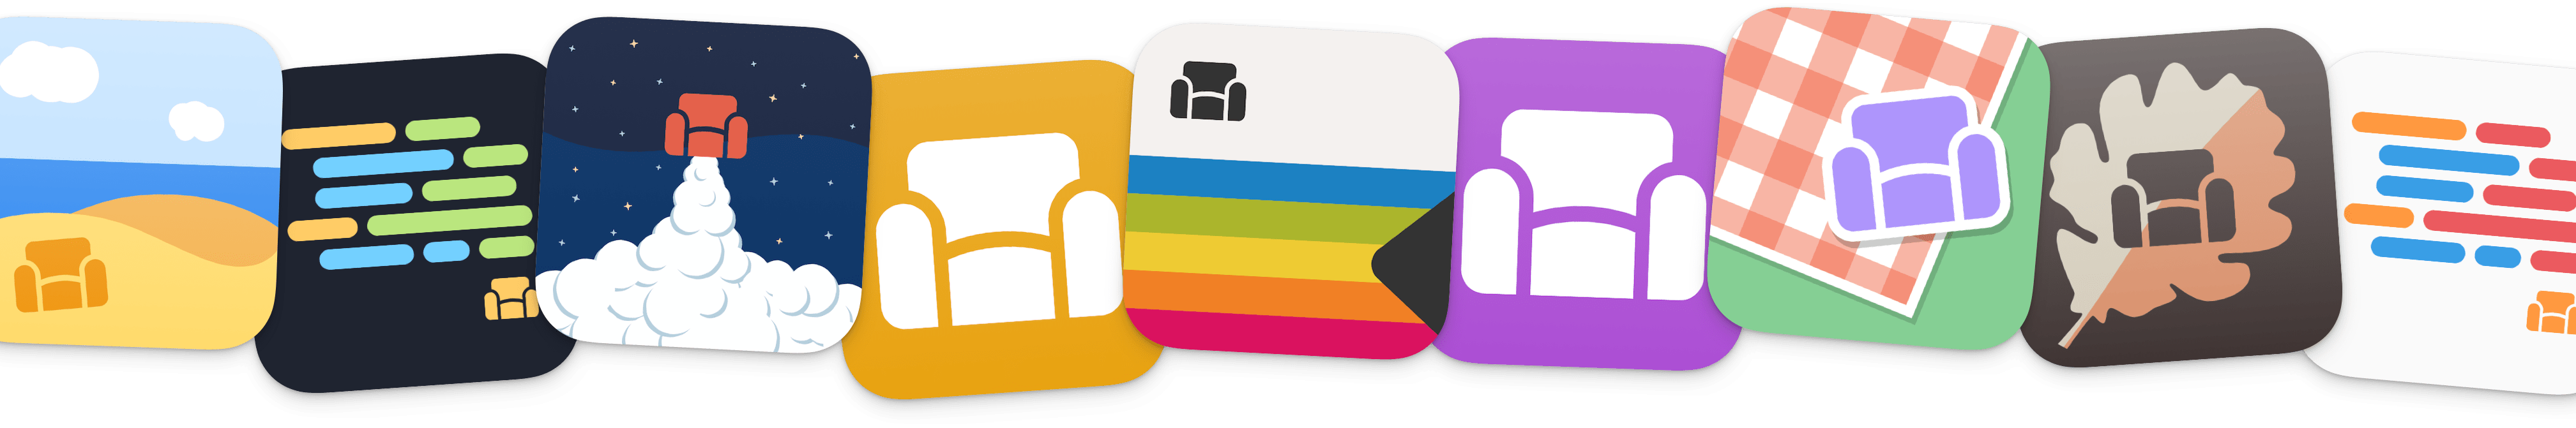 Strip of Sofa app icons